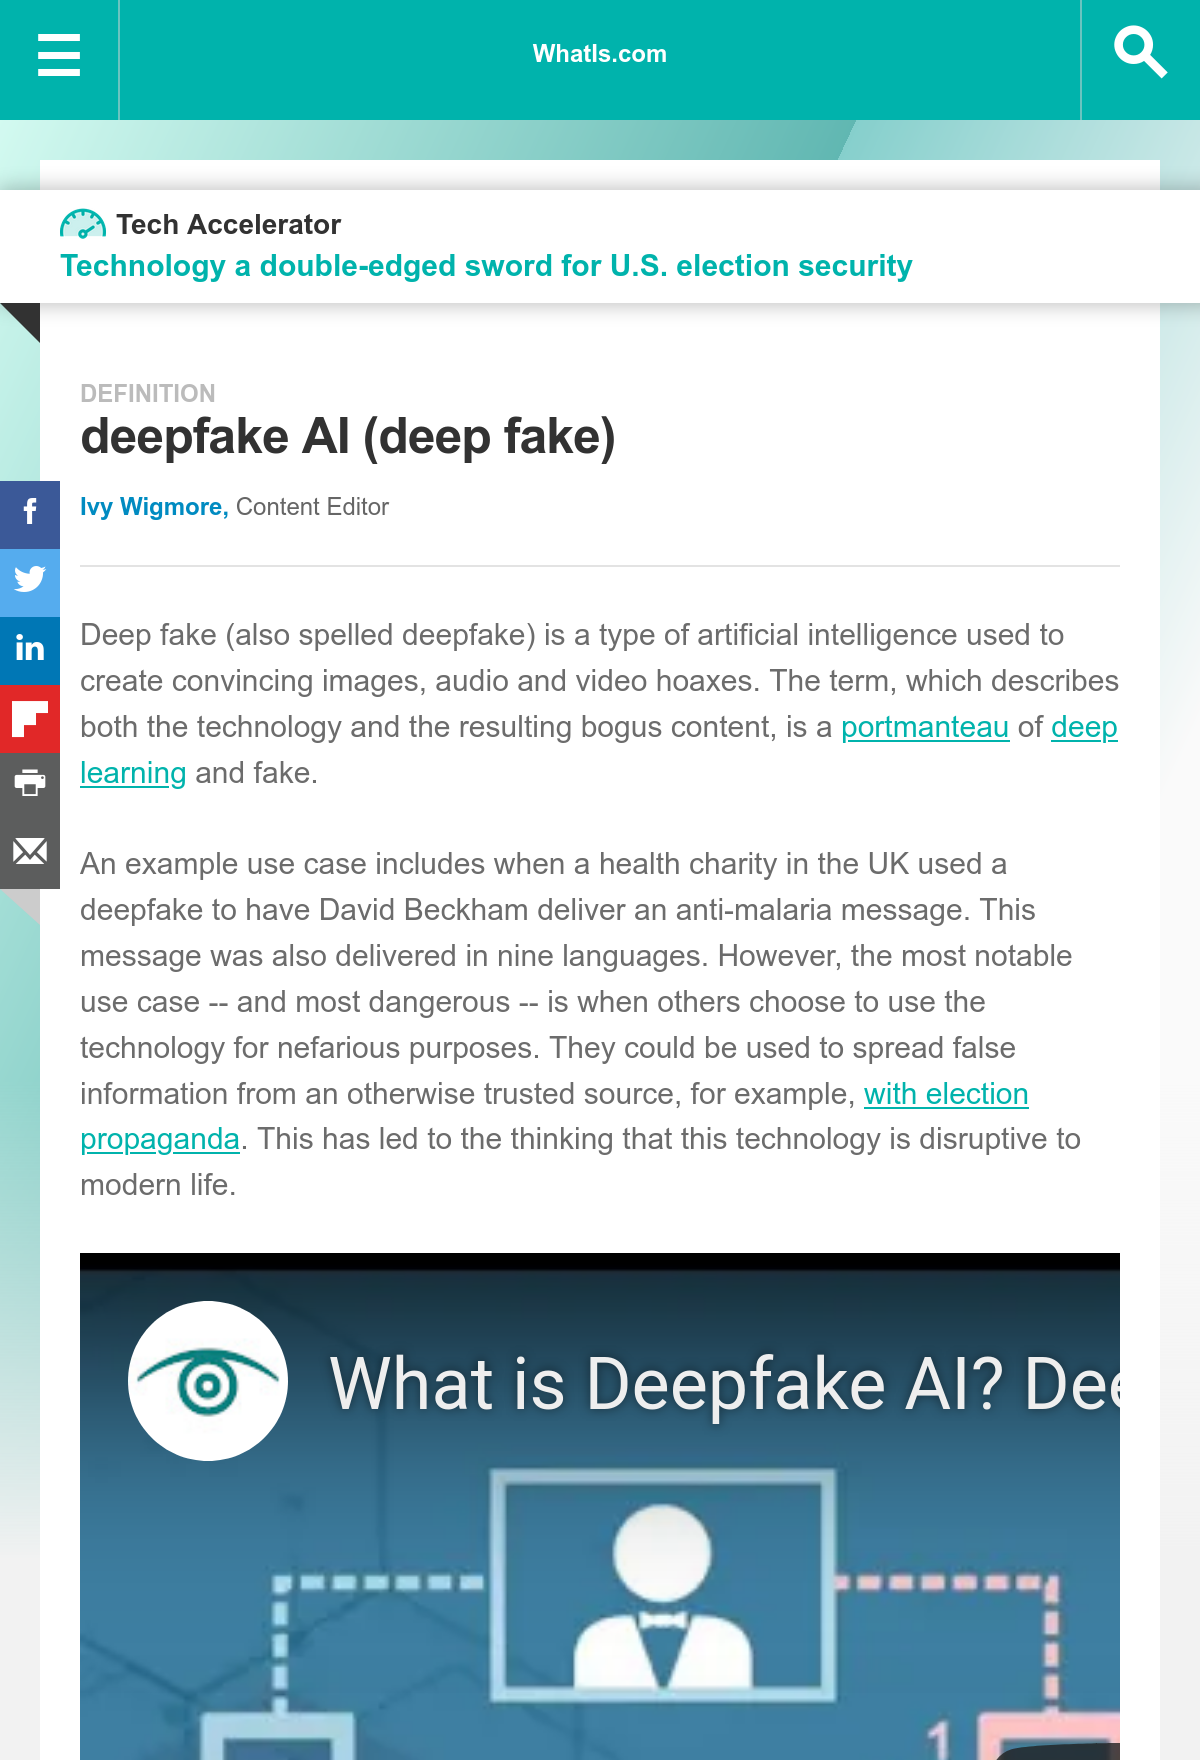 What is Deepfake